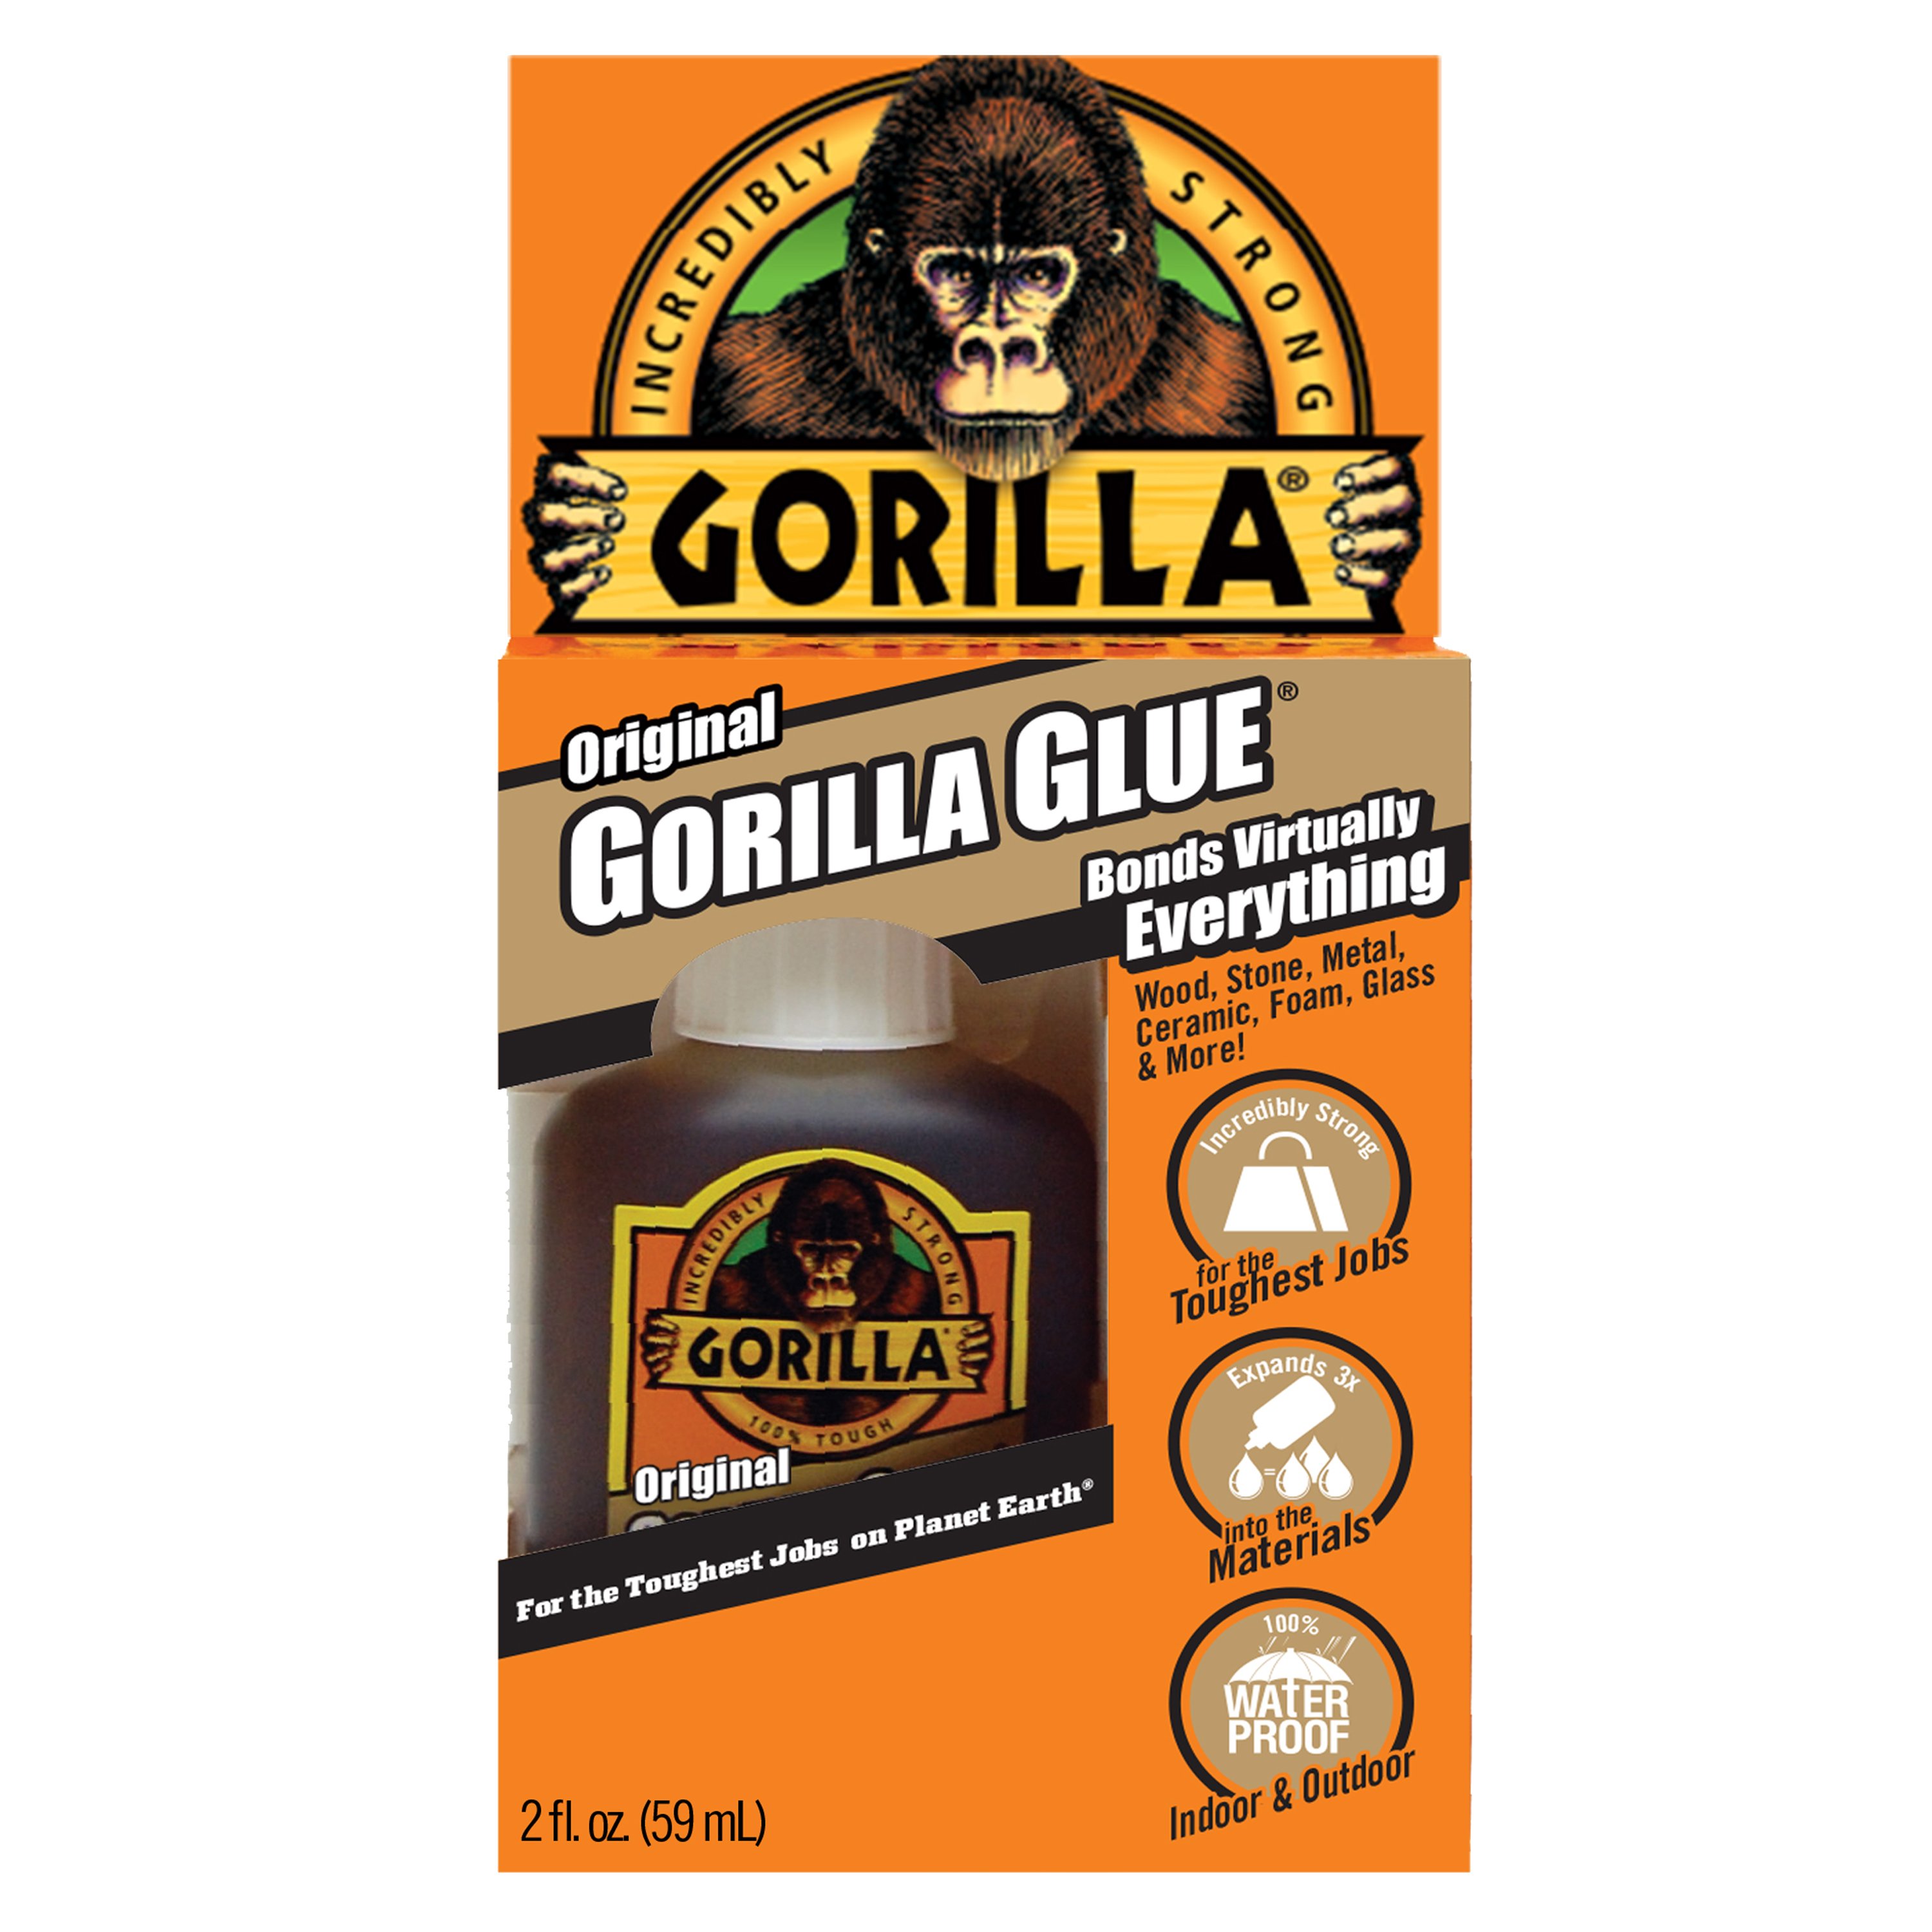 does original gorilla glue work on fabric